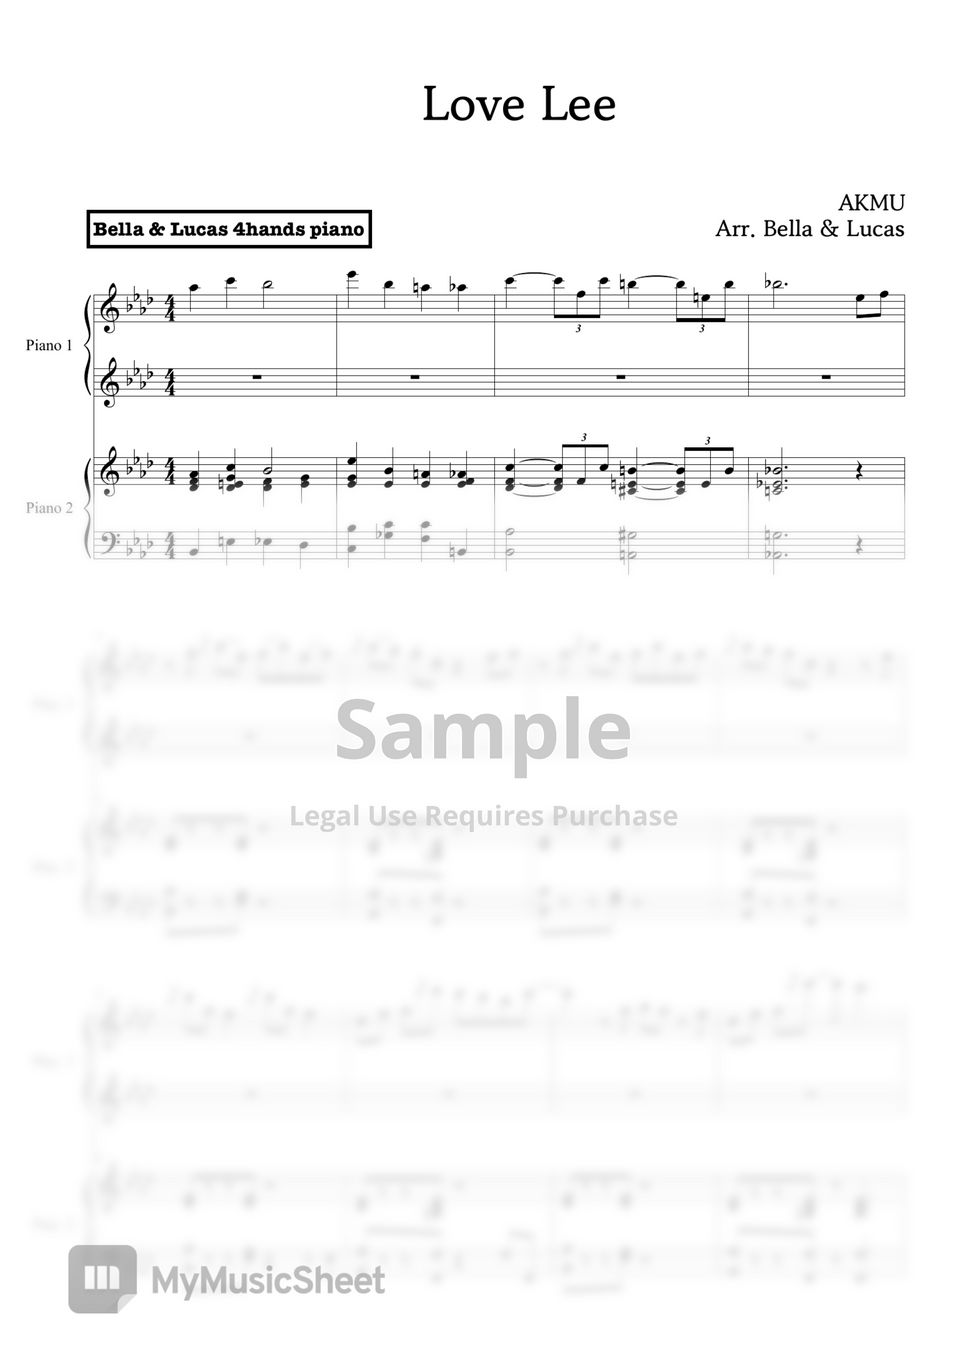 AKMU - Love Lee (4hands piano) by BELLA&LUCAS